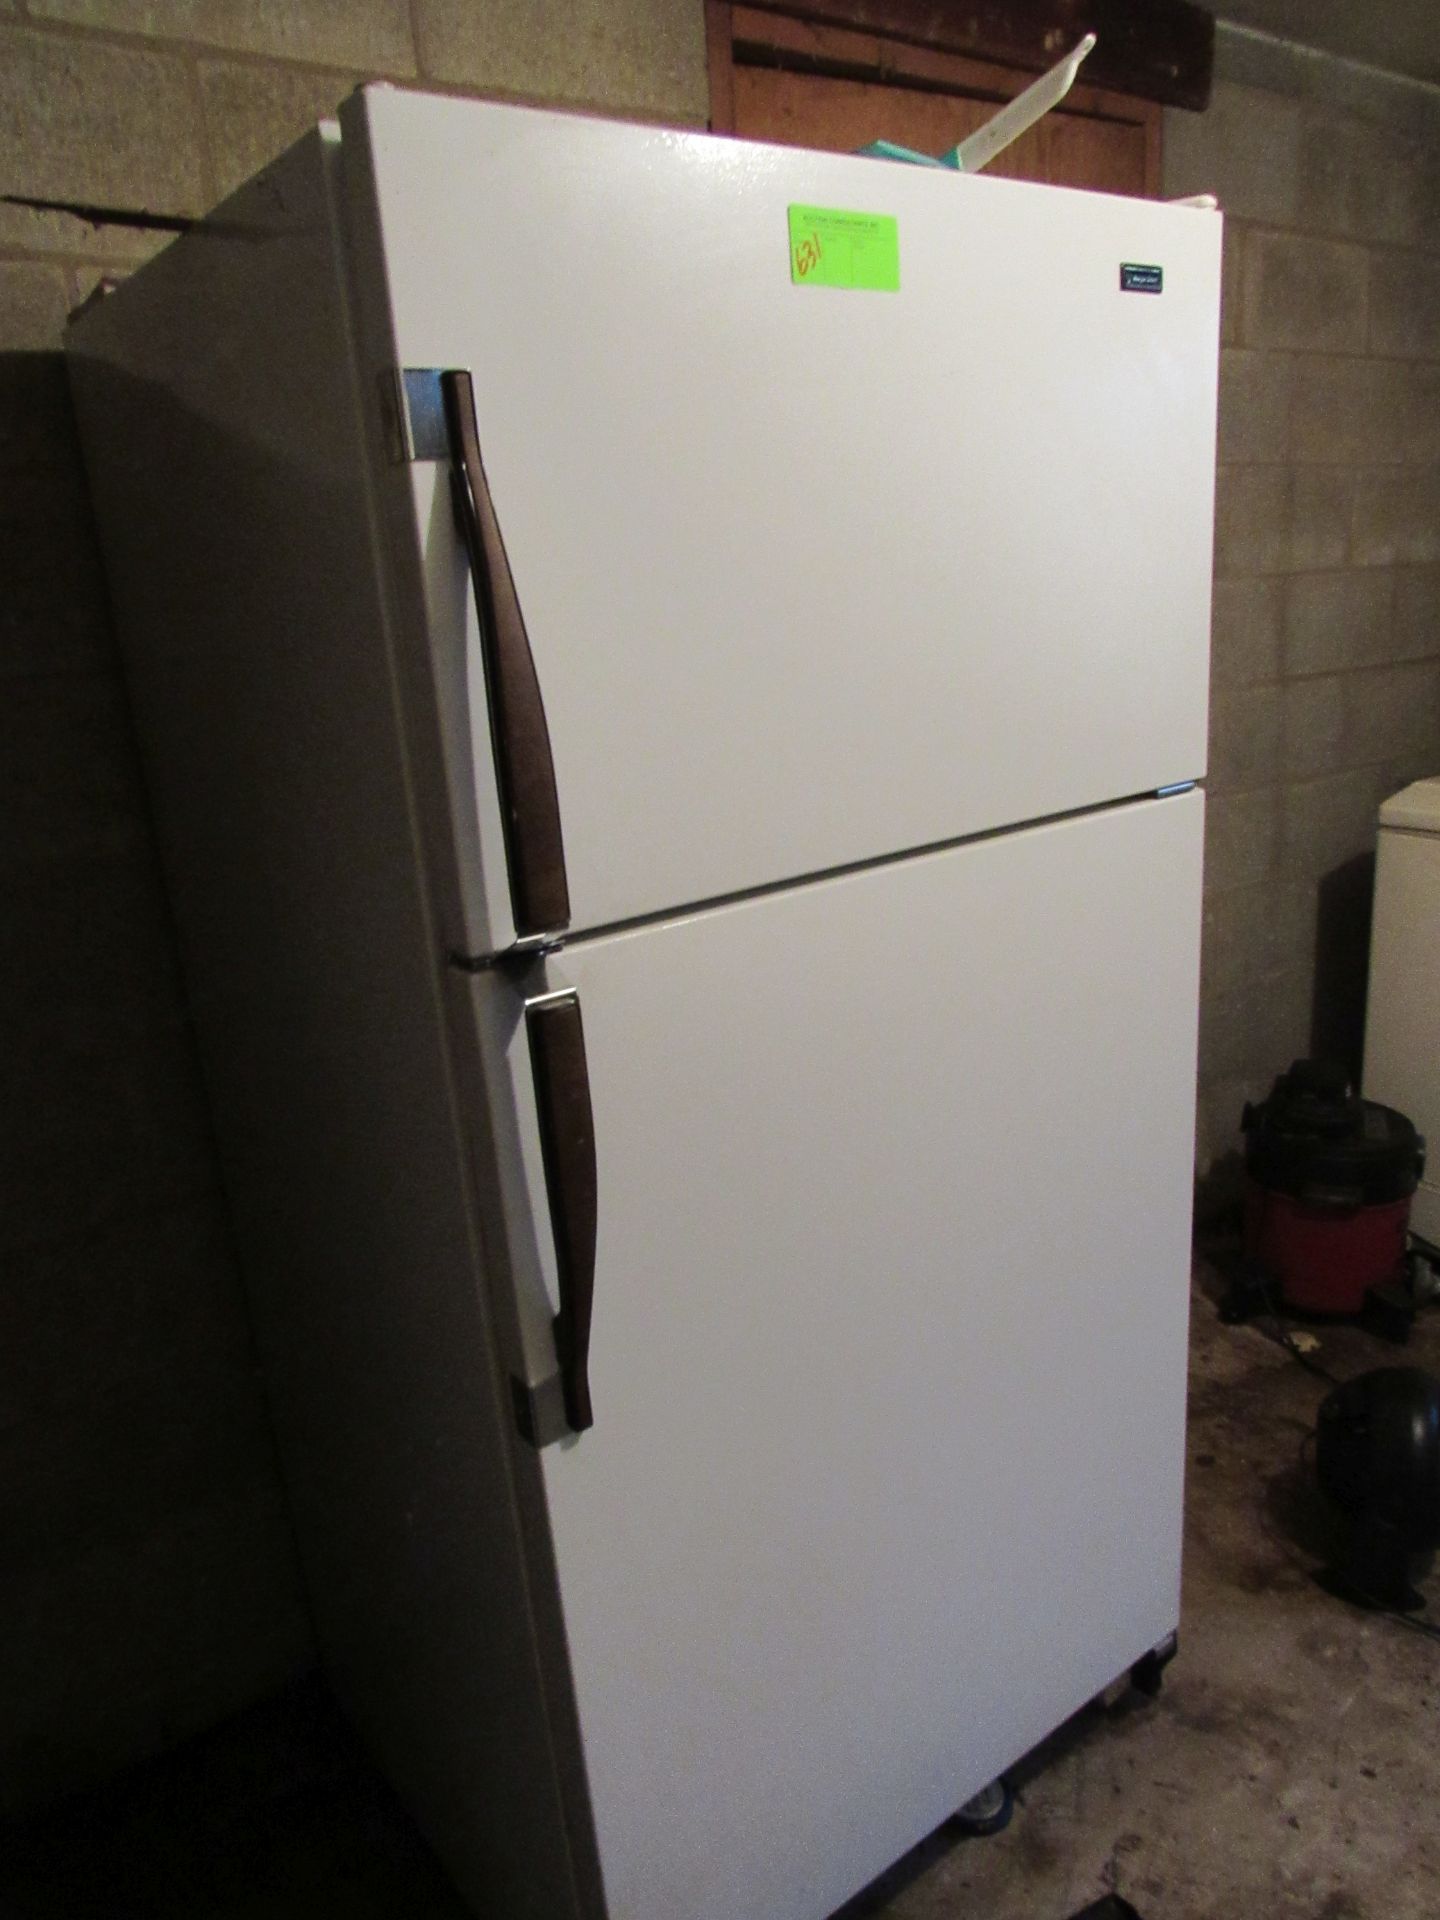 Magic Chef residential refrigerator freezer